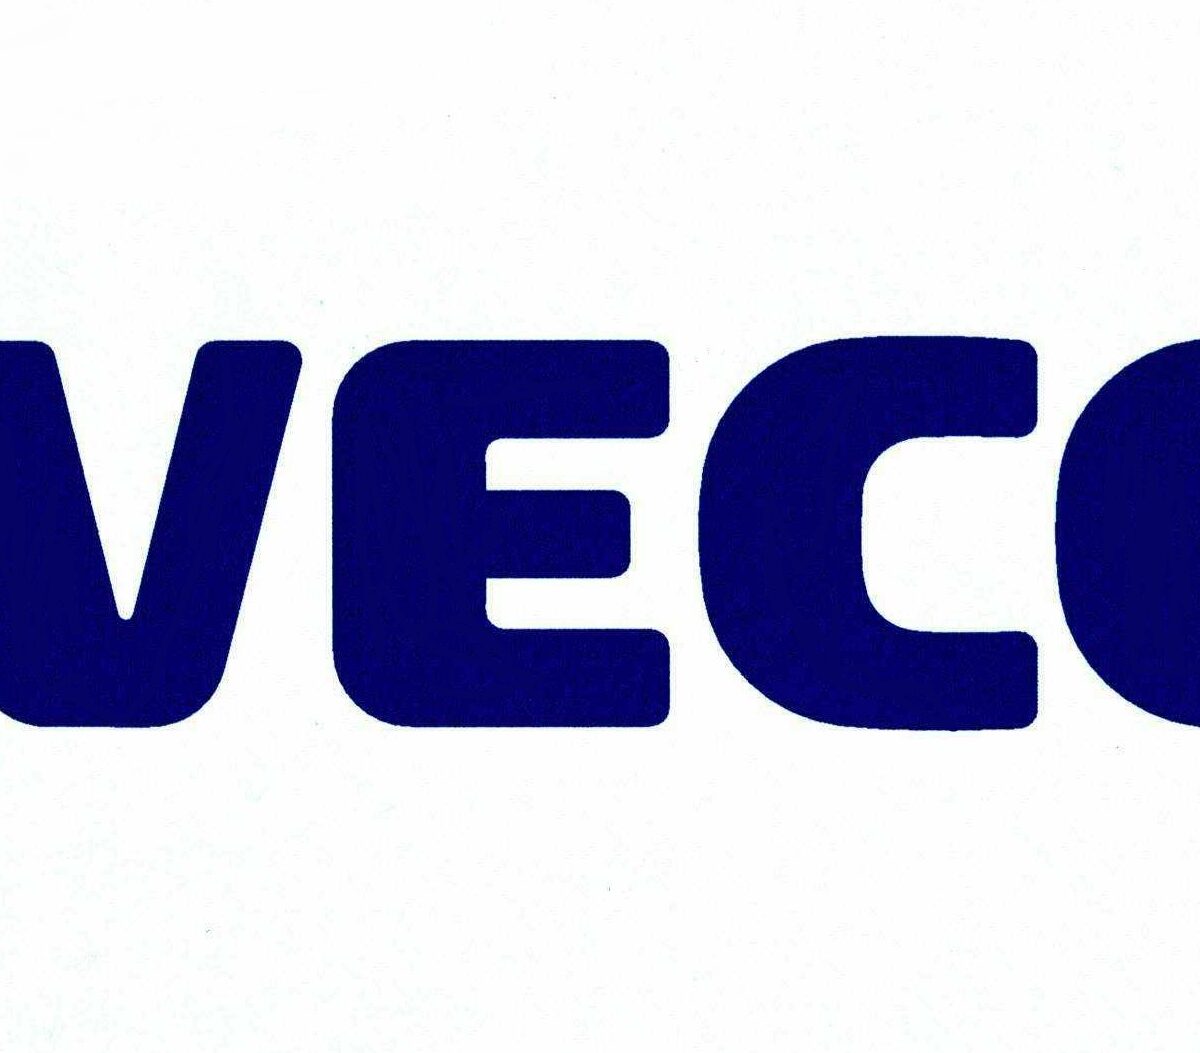 Iveco-logo